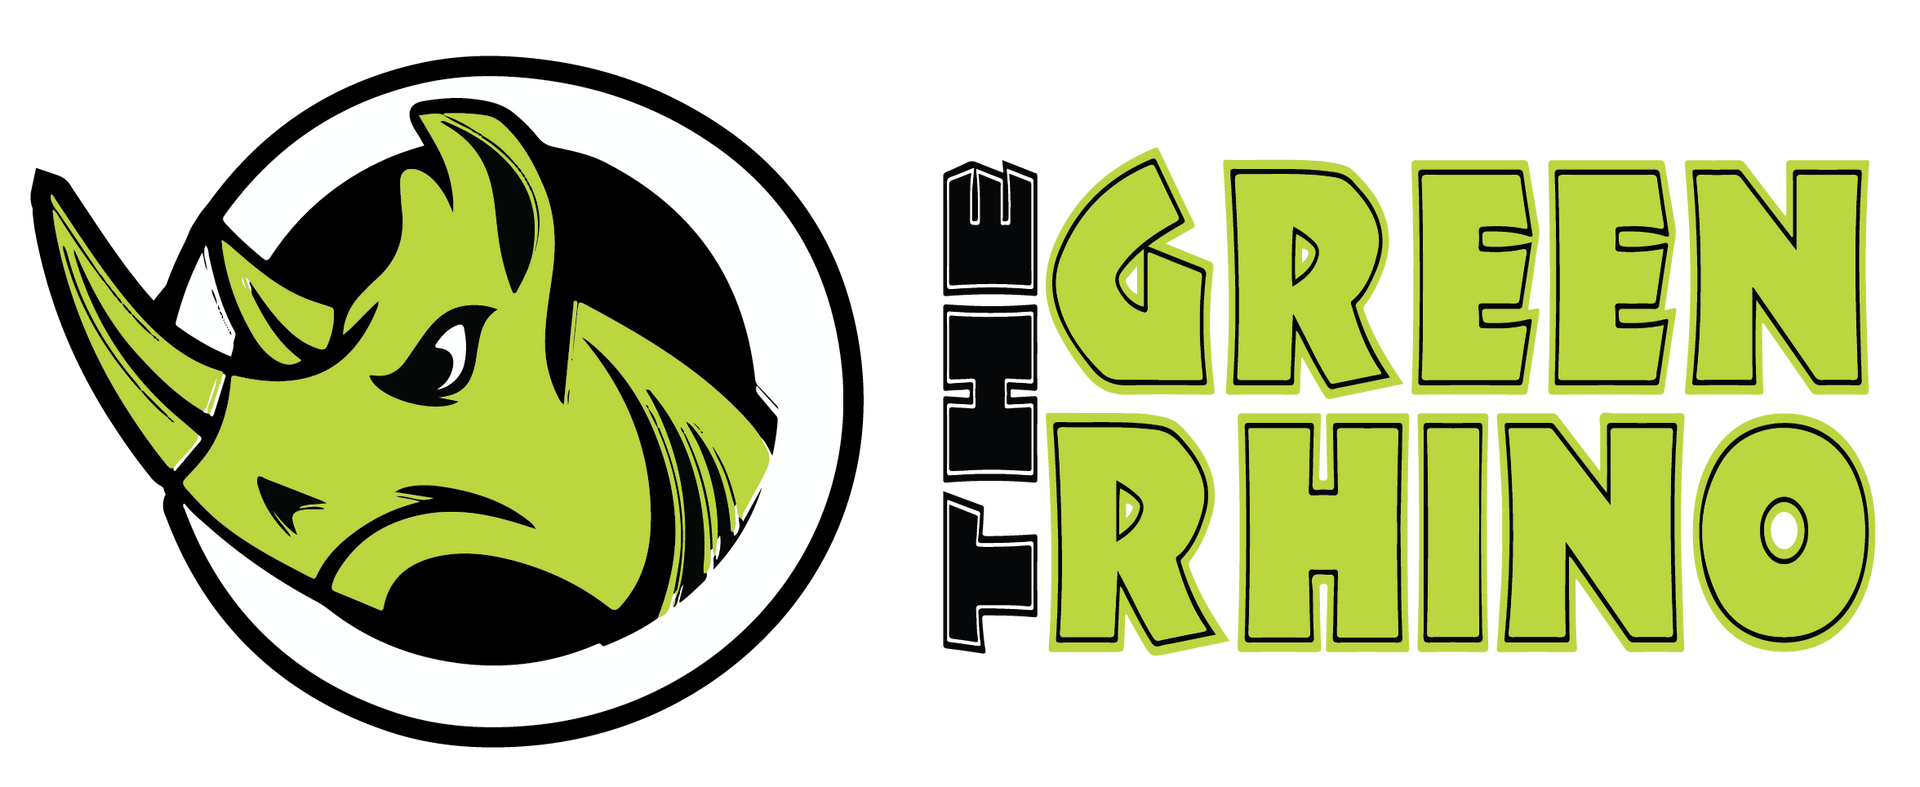 The Green Rhino Junk Removal Logo